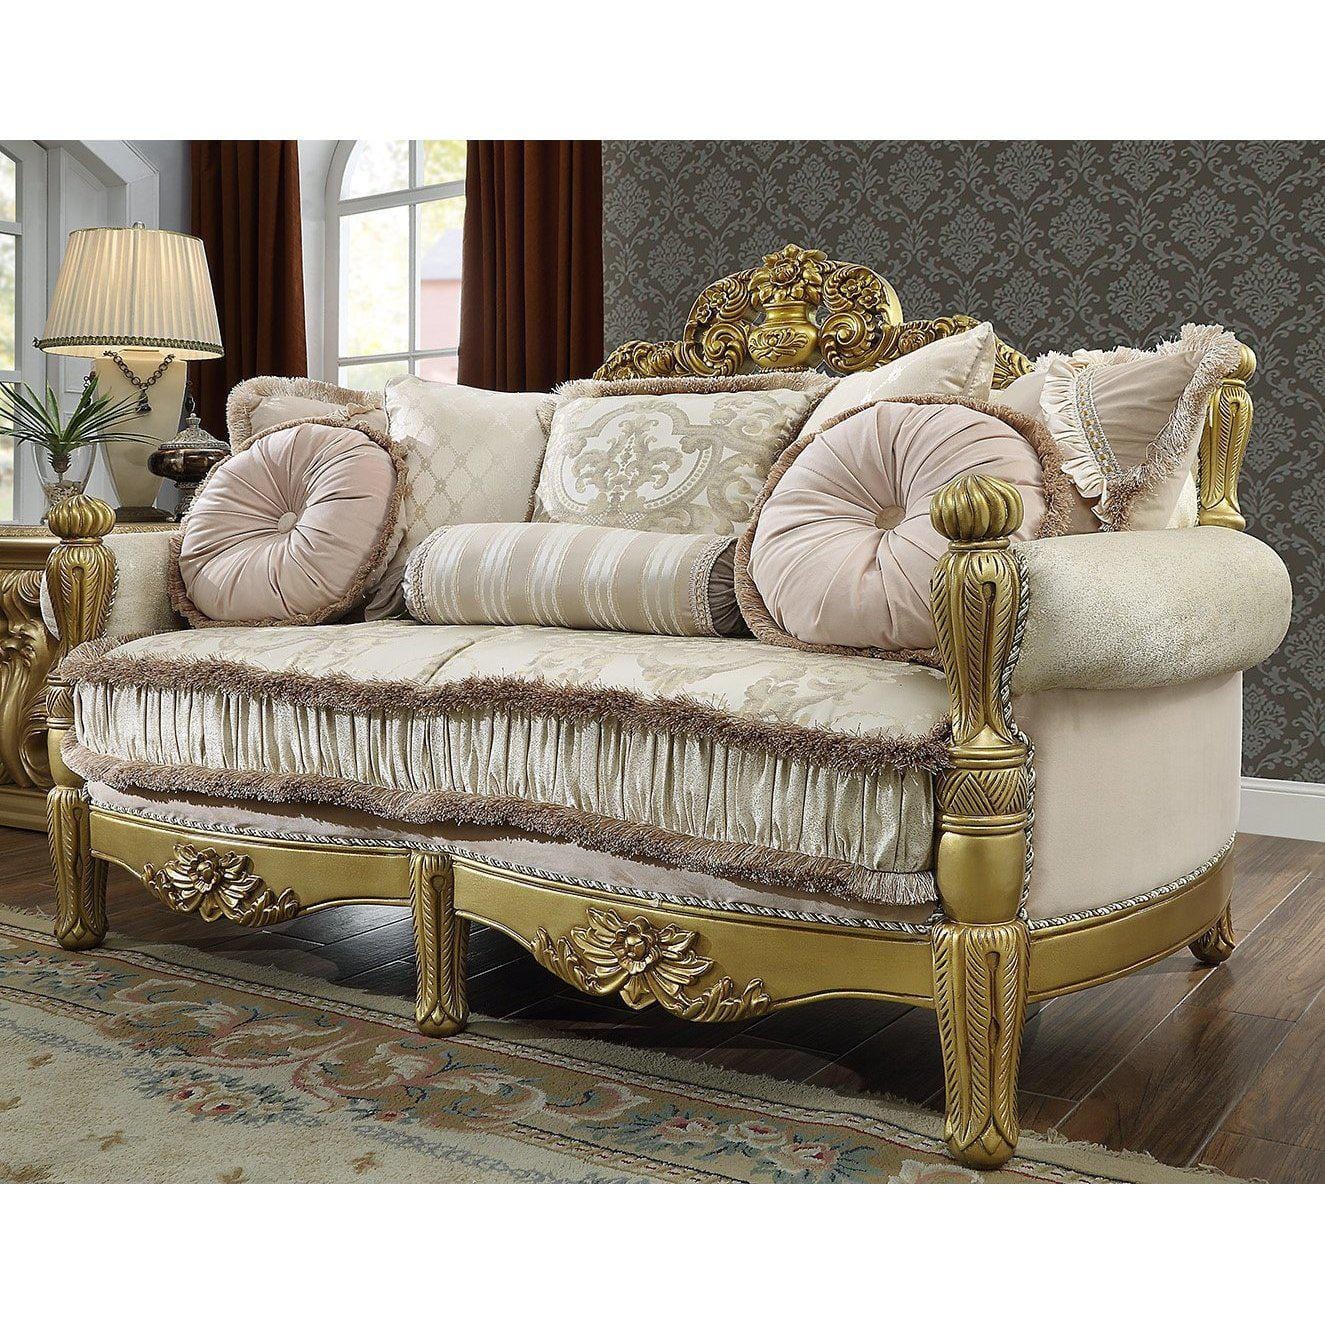 Homey Design Luxury Hd-105 3Pc Sofa Set